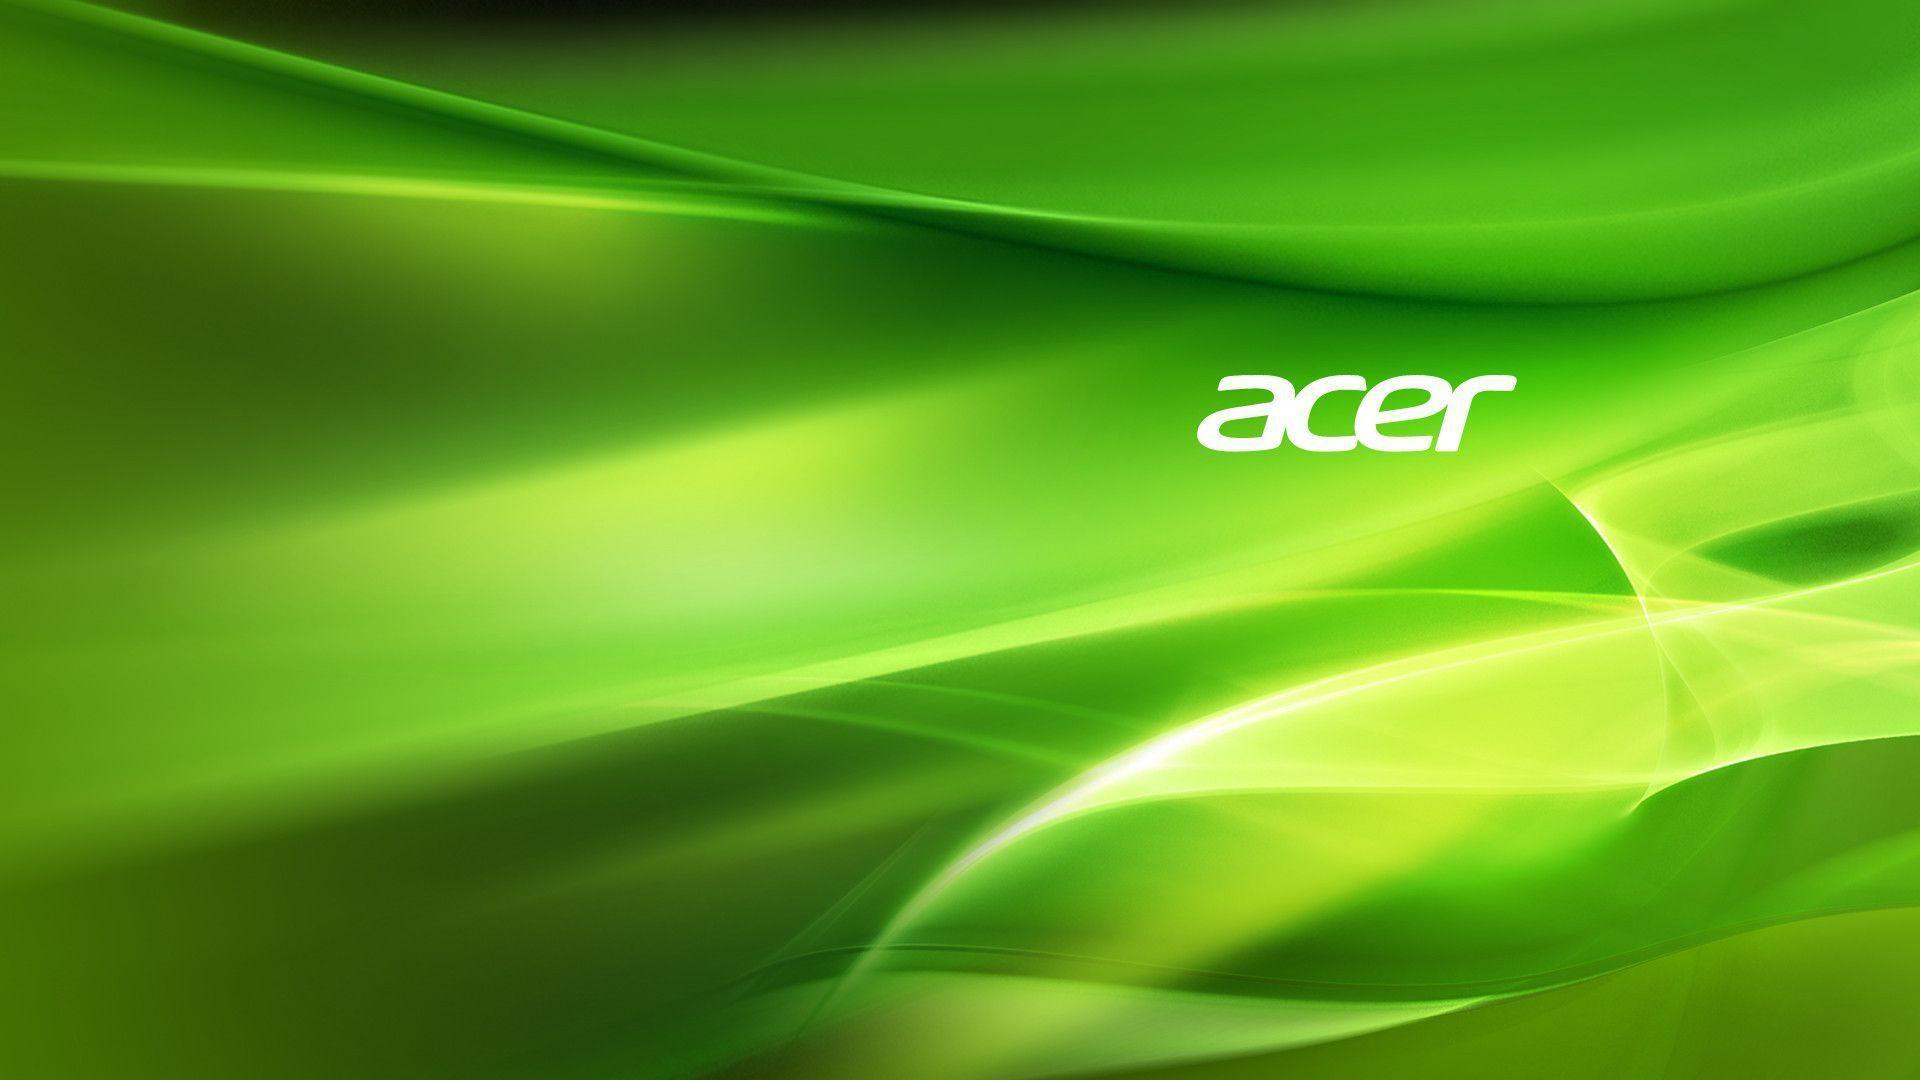 Acer Veriton Wallpaper 2015